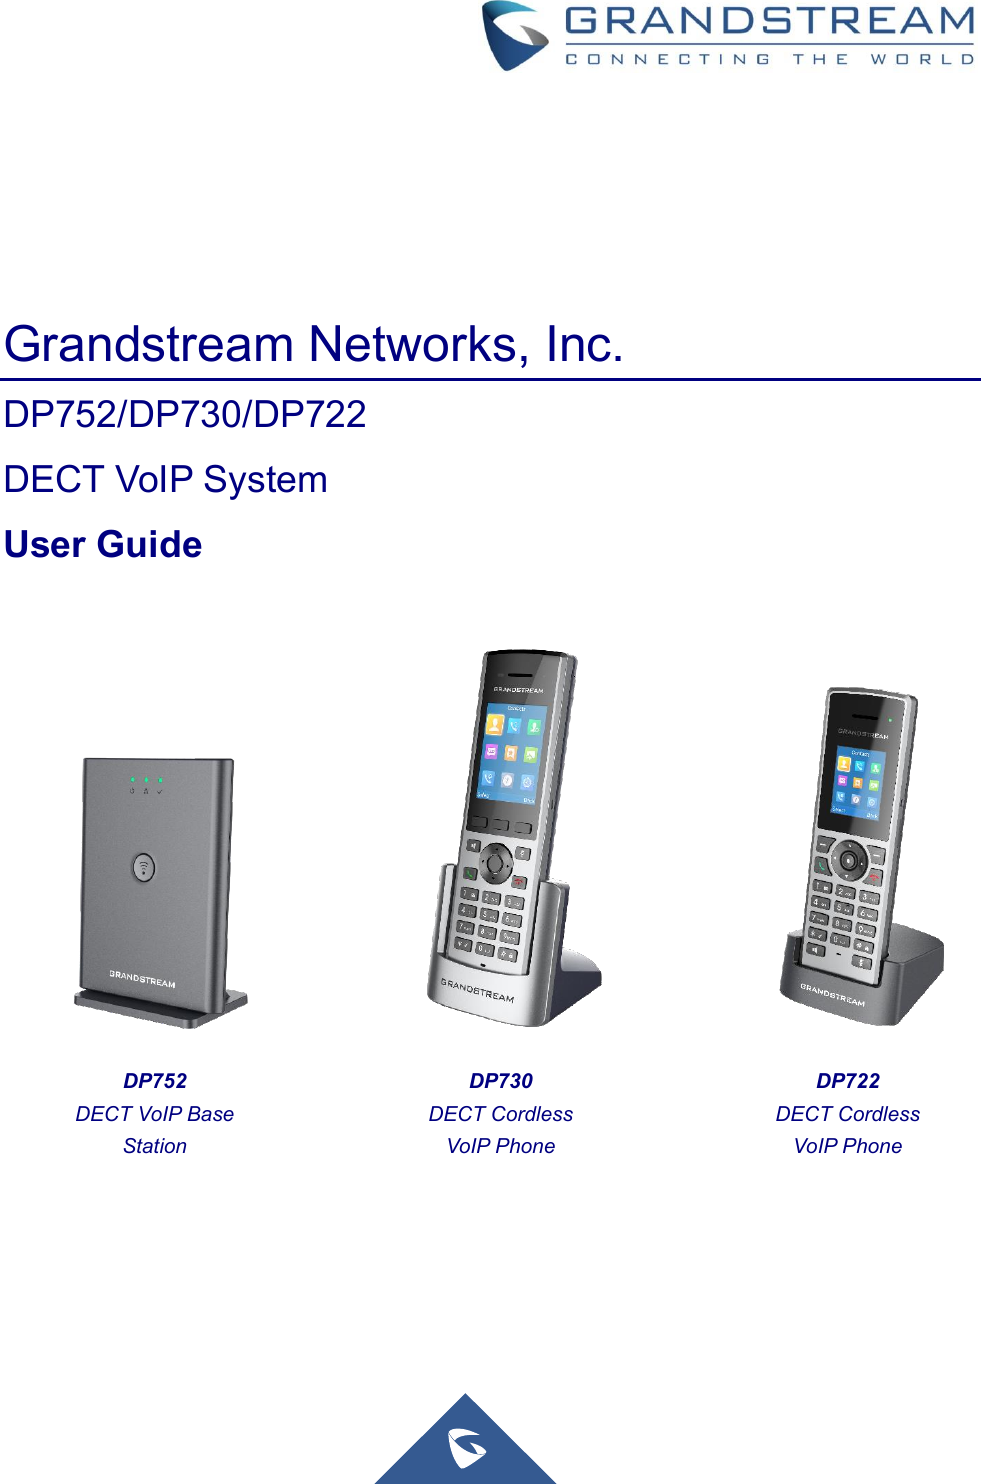                  Grandstream Networks, Inc. DP752/DP730/DP722   DECT VoIP System User Guide  DP752 DECT VoIP Base Station DP730 DECT Cordless VoIP Phone DP722 DECT Cordless VoIP Phone 